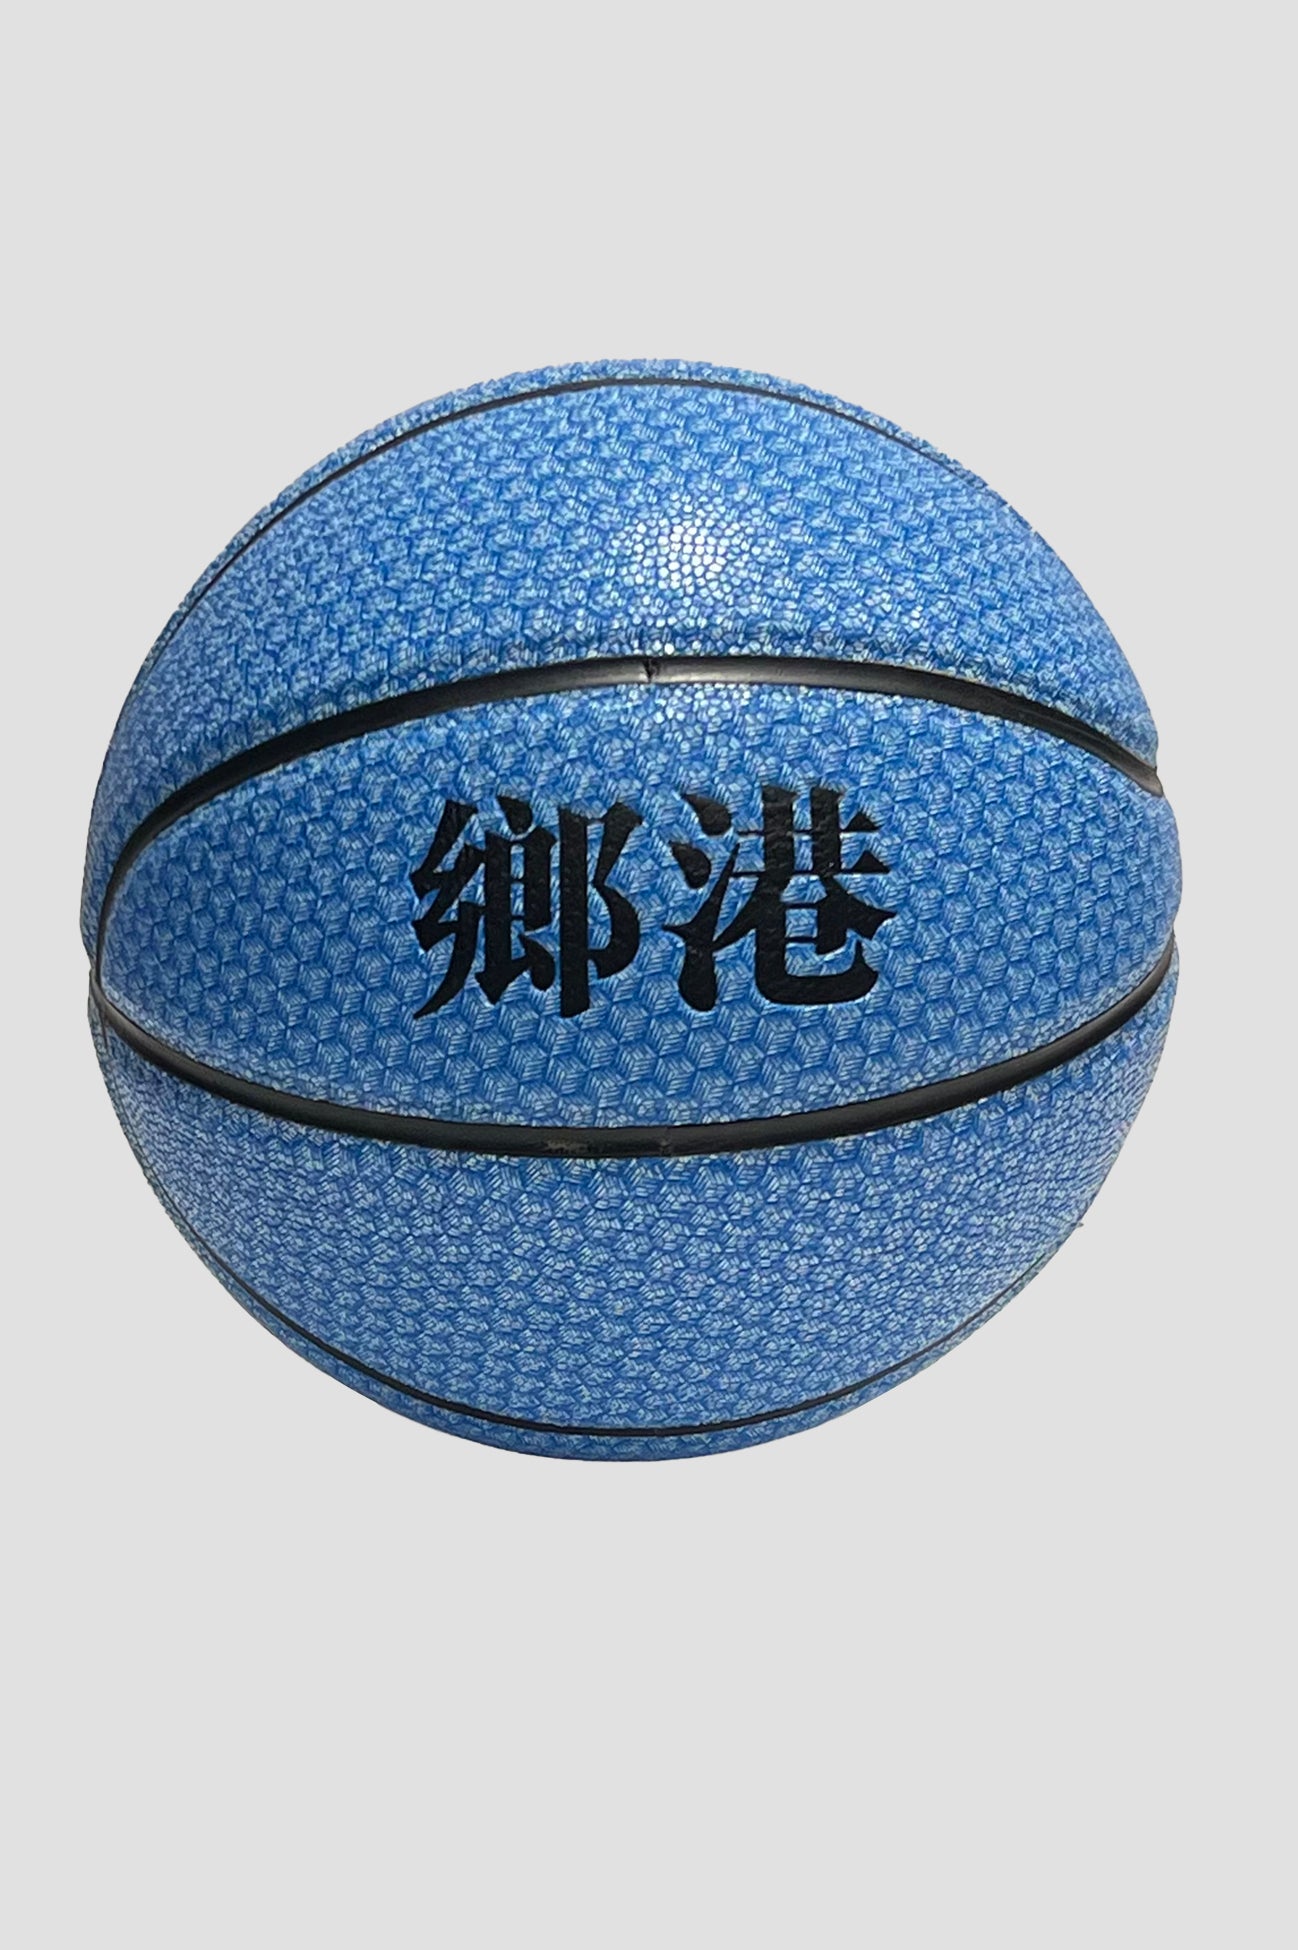 Basketball Limited